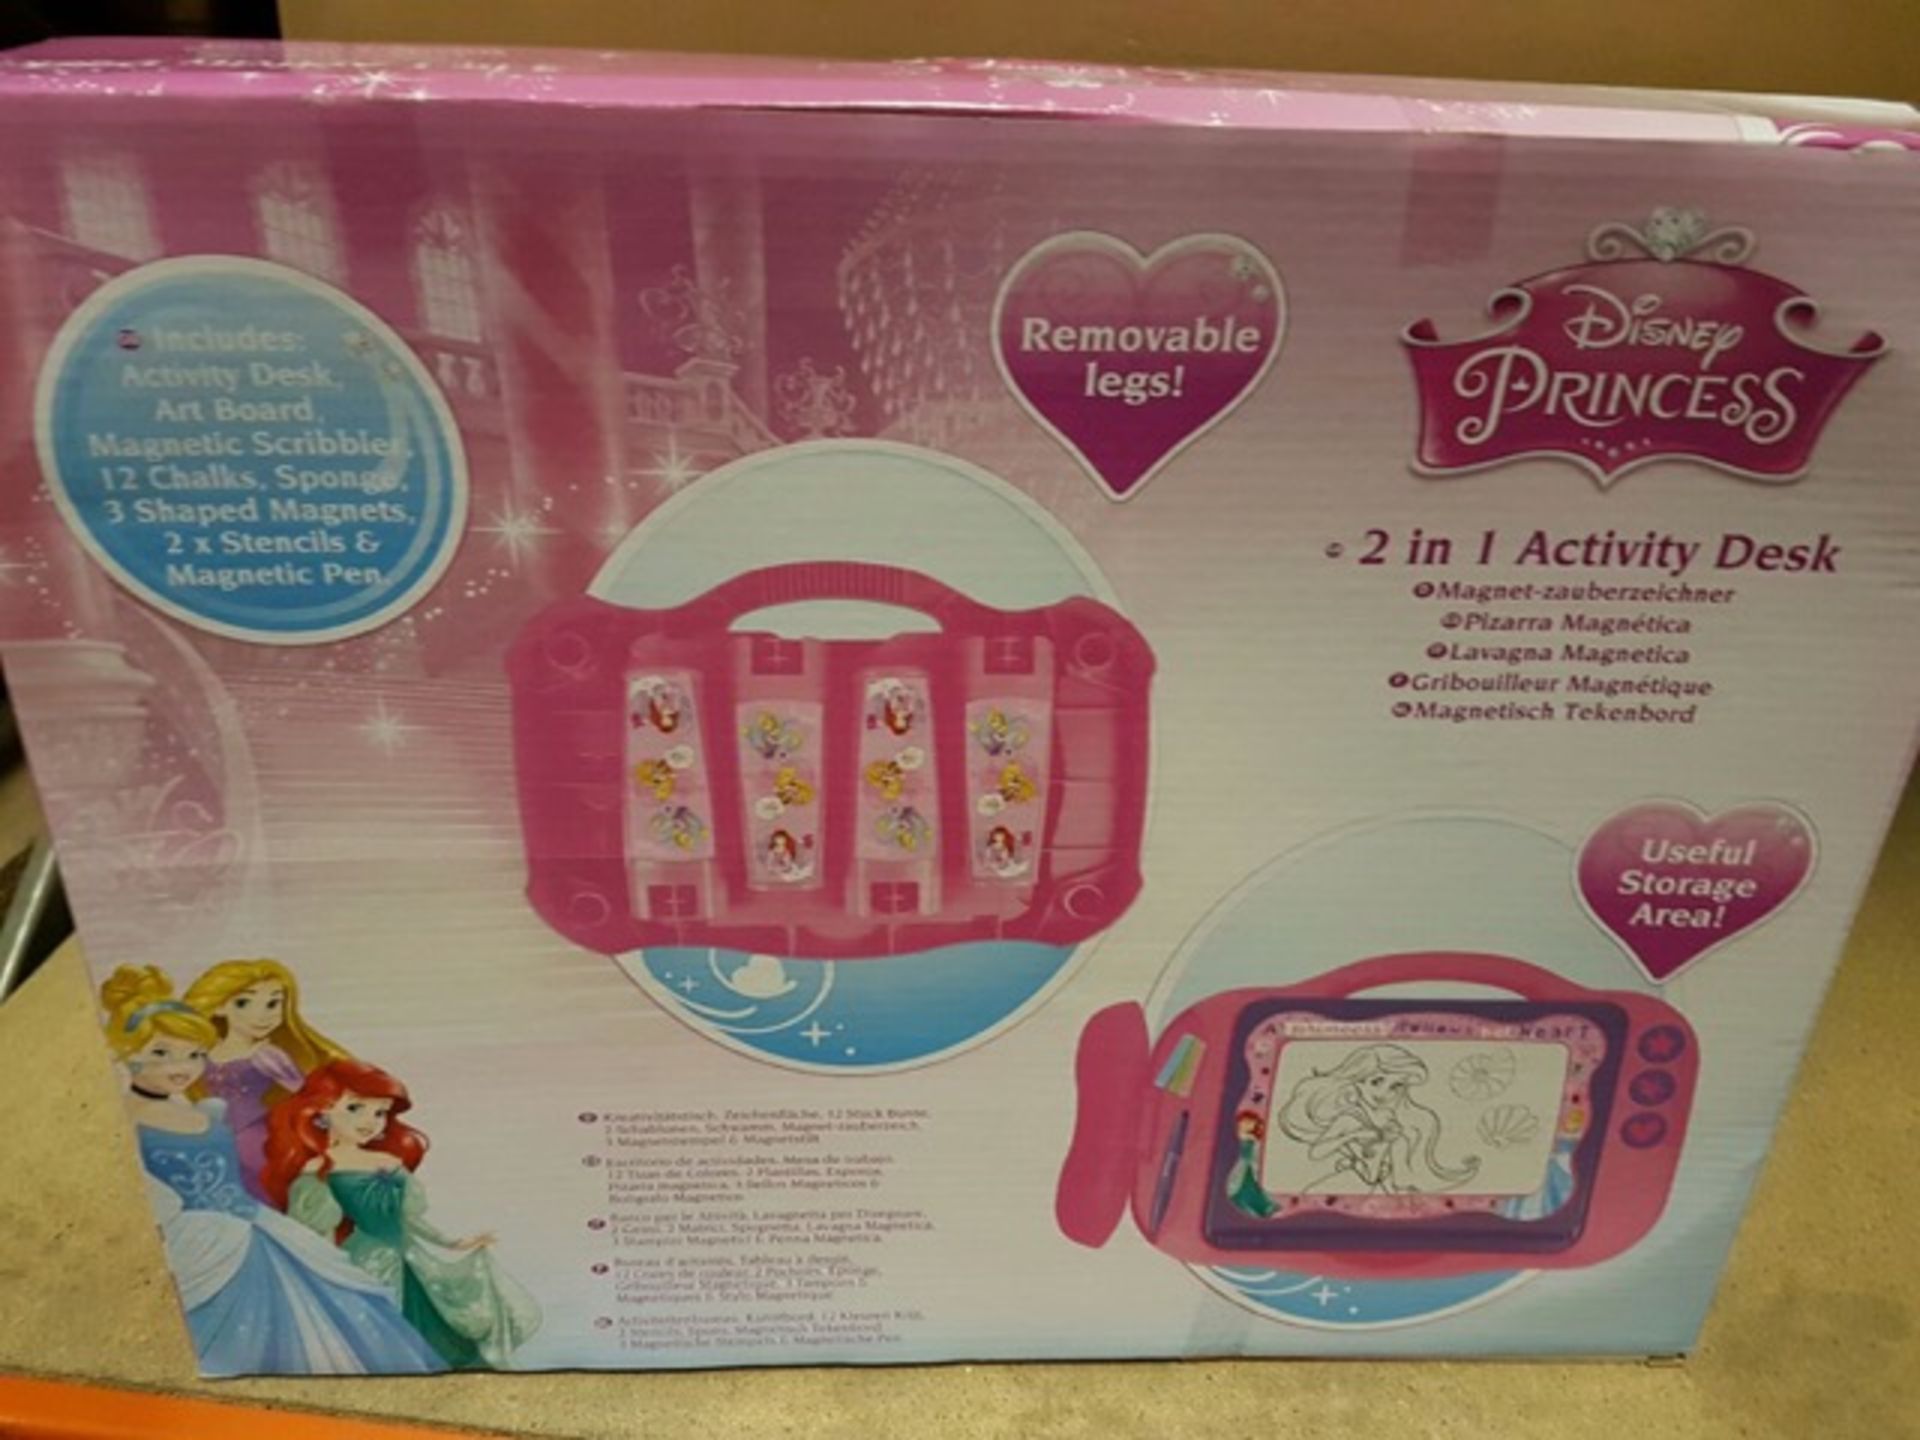 12 x Brand New Disney Princess 2 in 1 Activity Desks. - Image 2 of 2